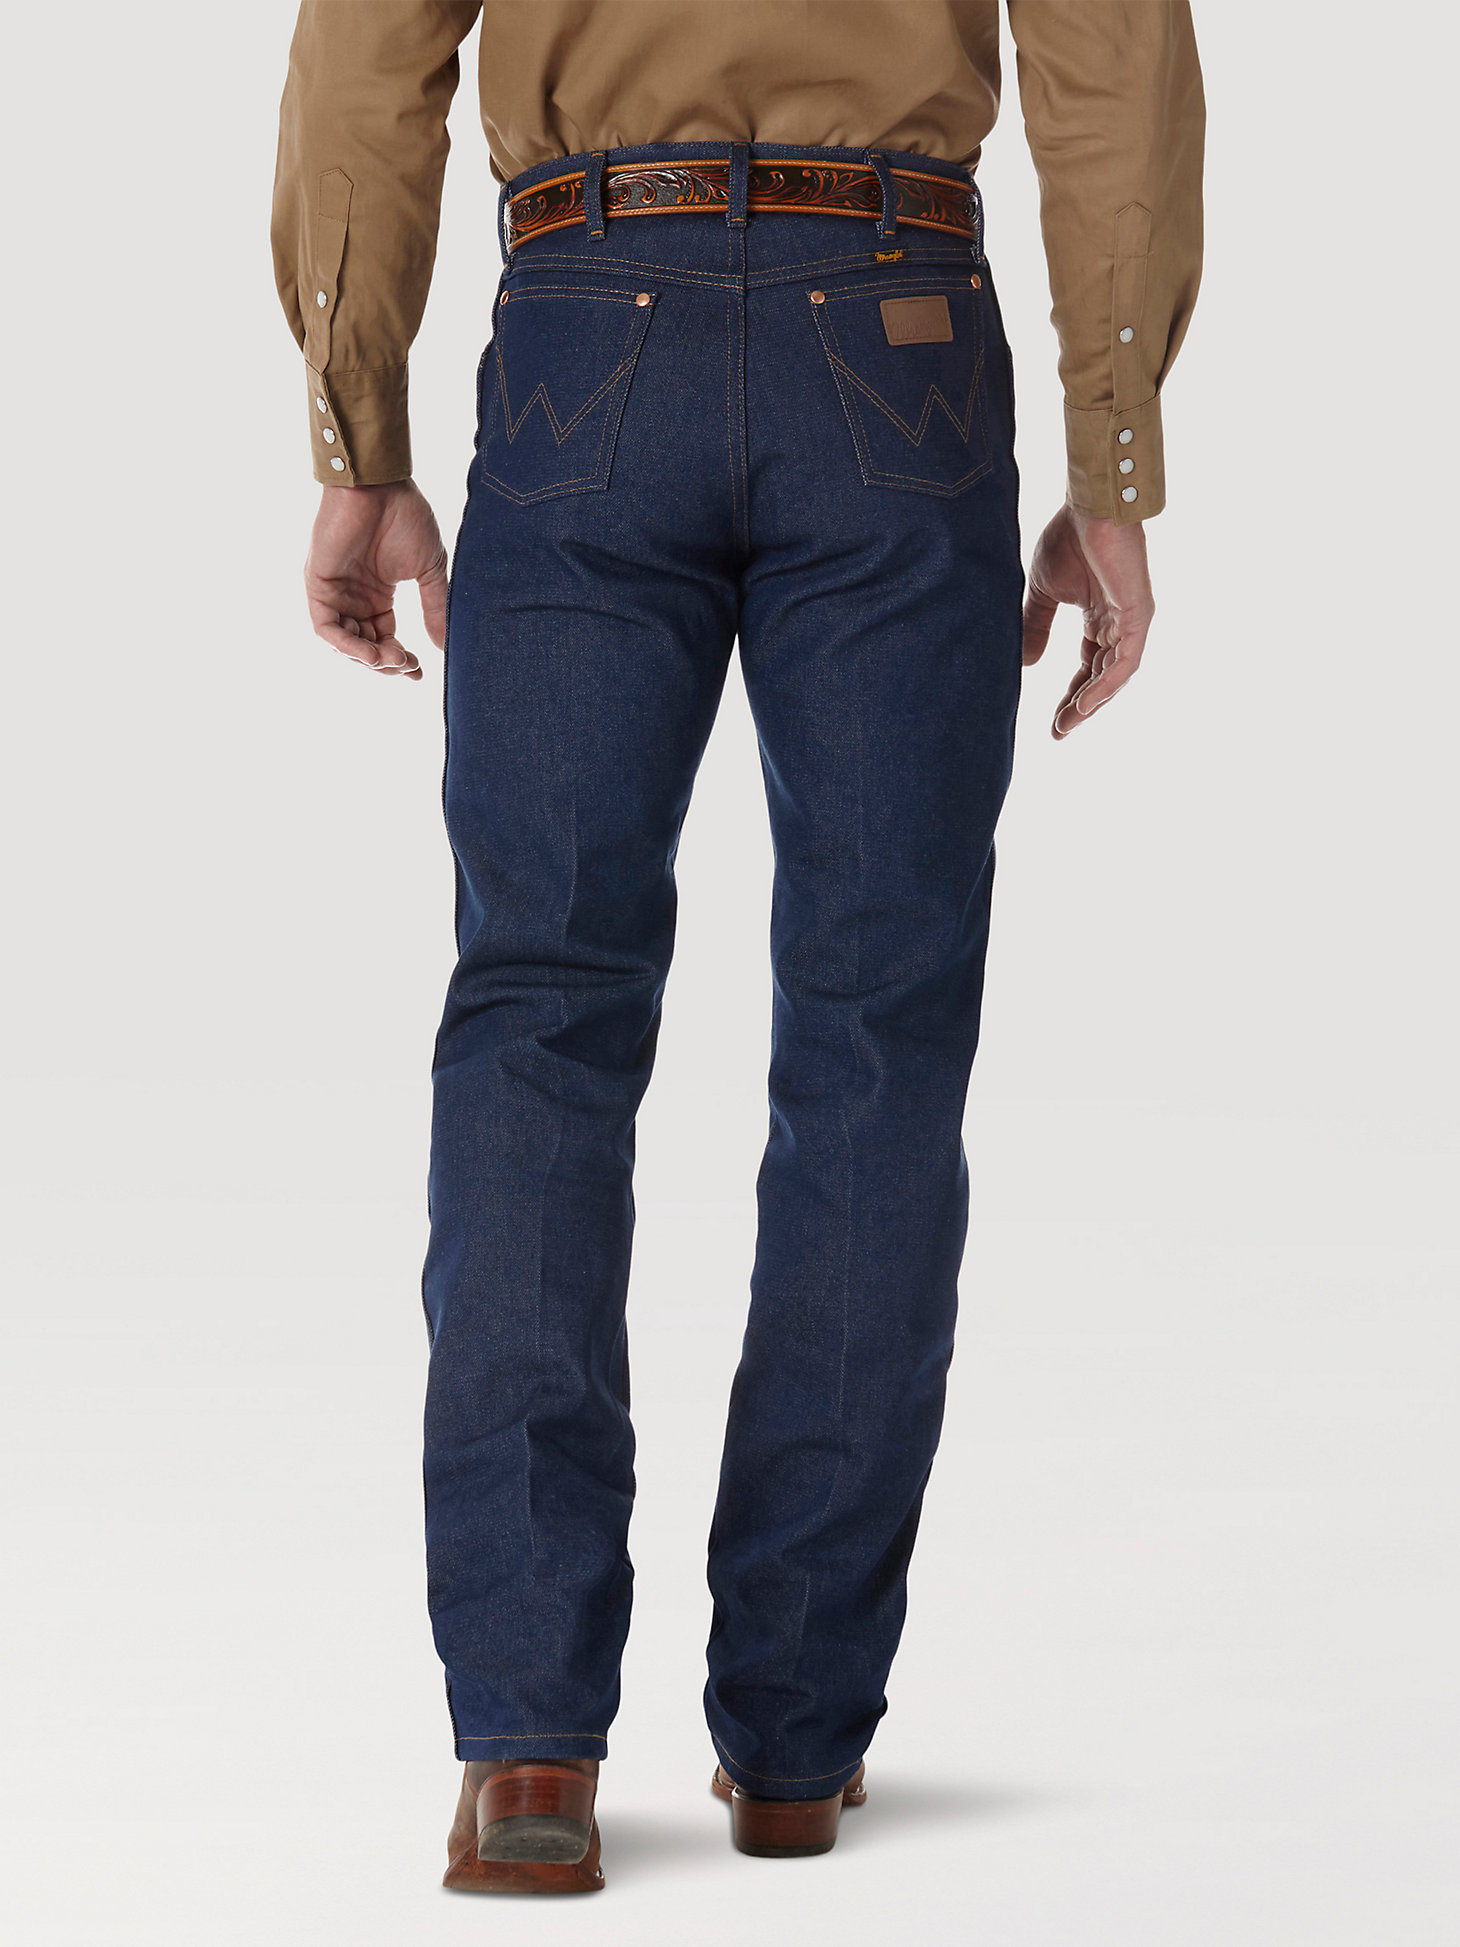 Rigid Wrangler® Cowboy Cut® Original Fit Jean in Rigid Indigo alternative view 2